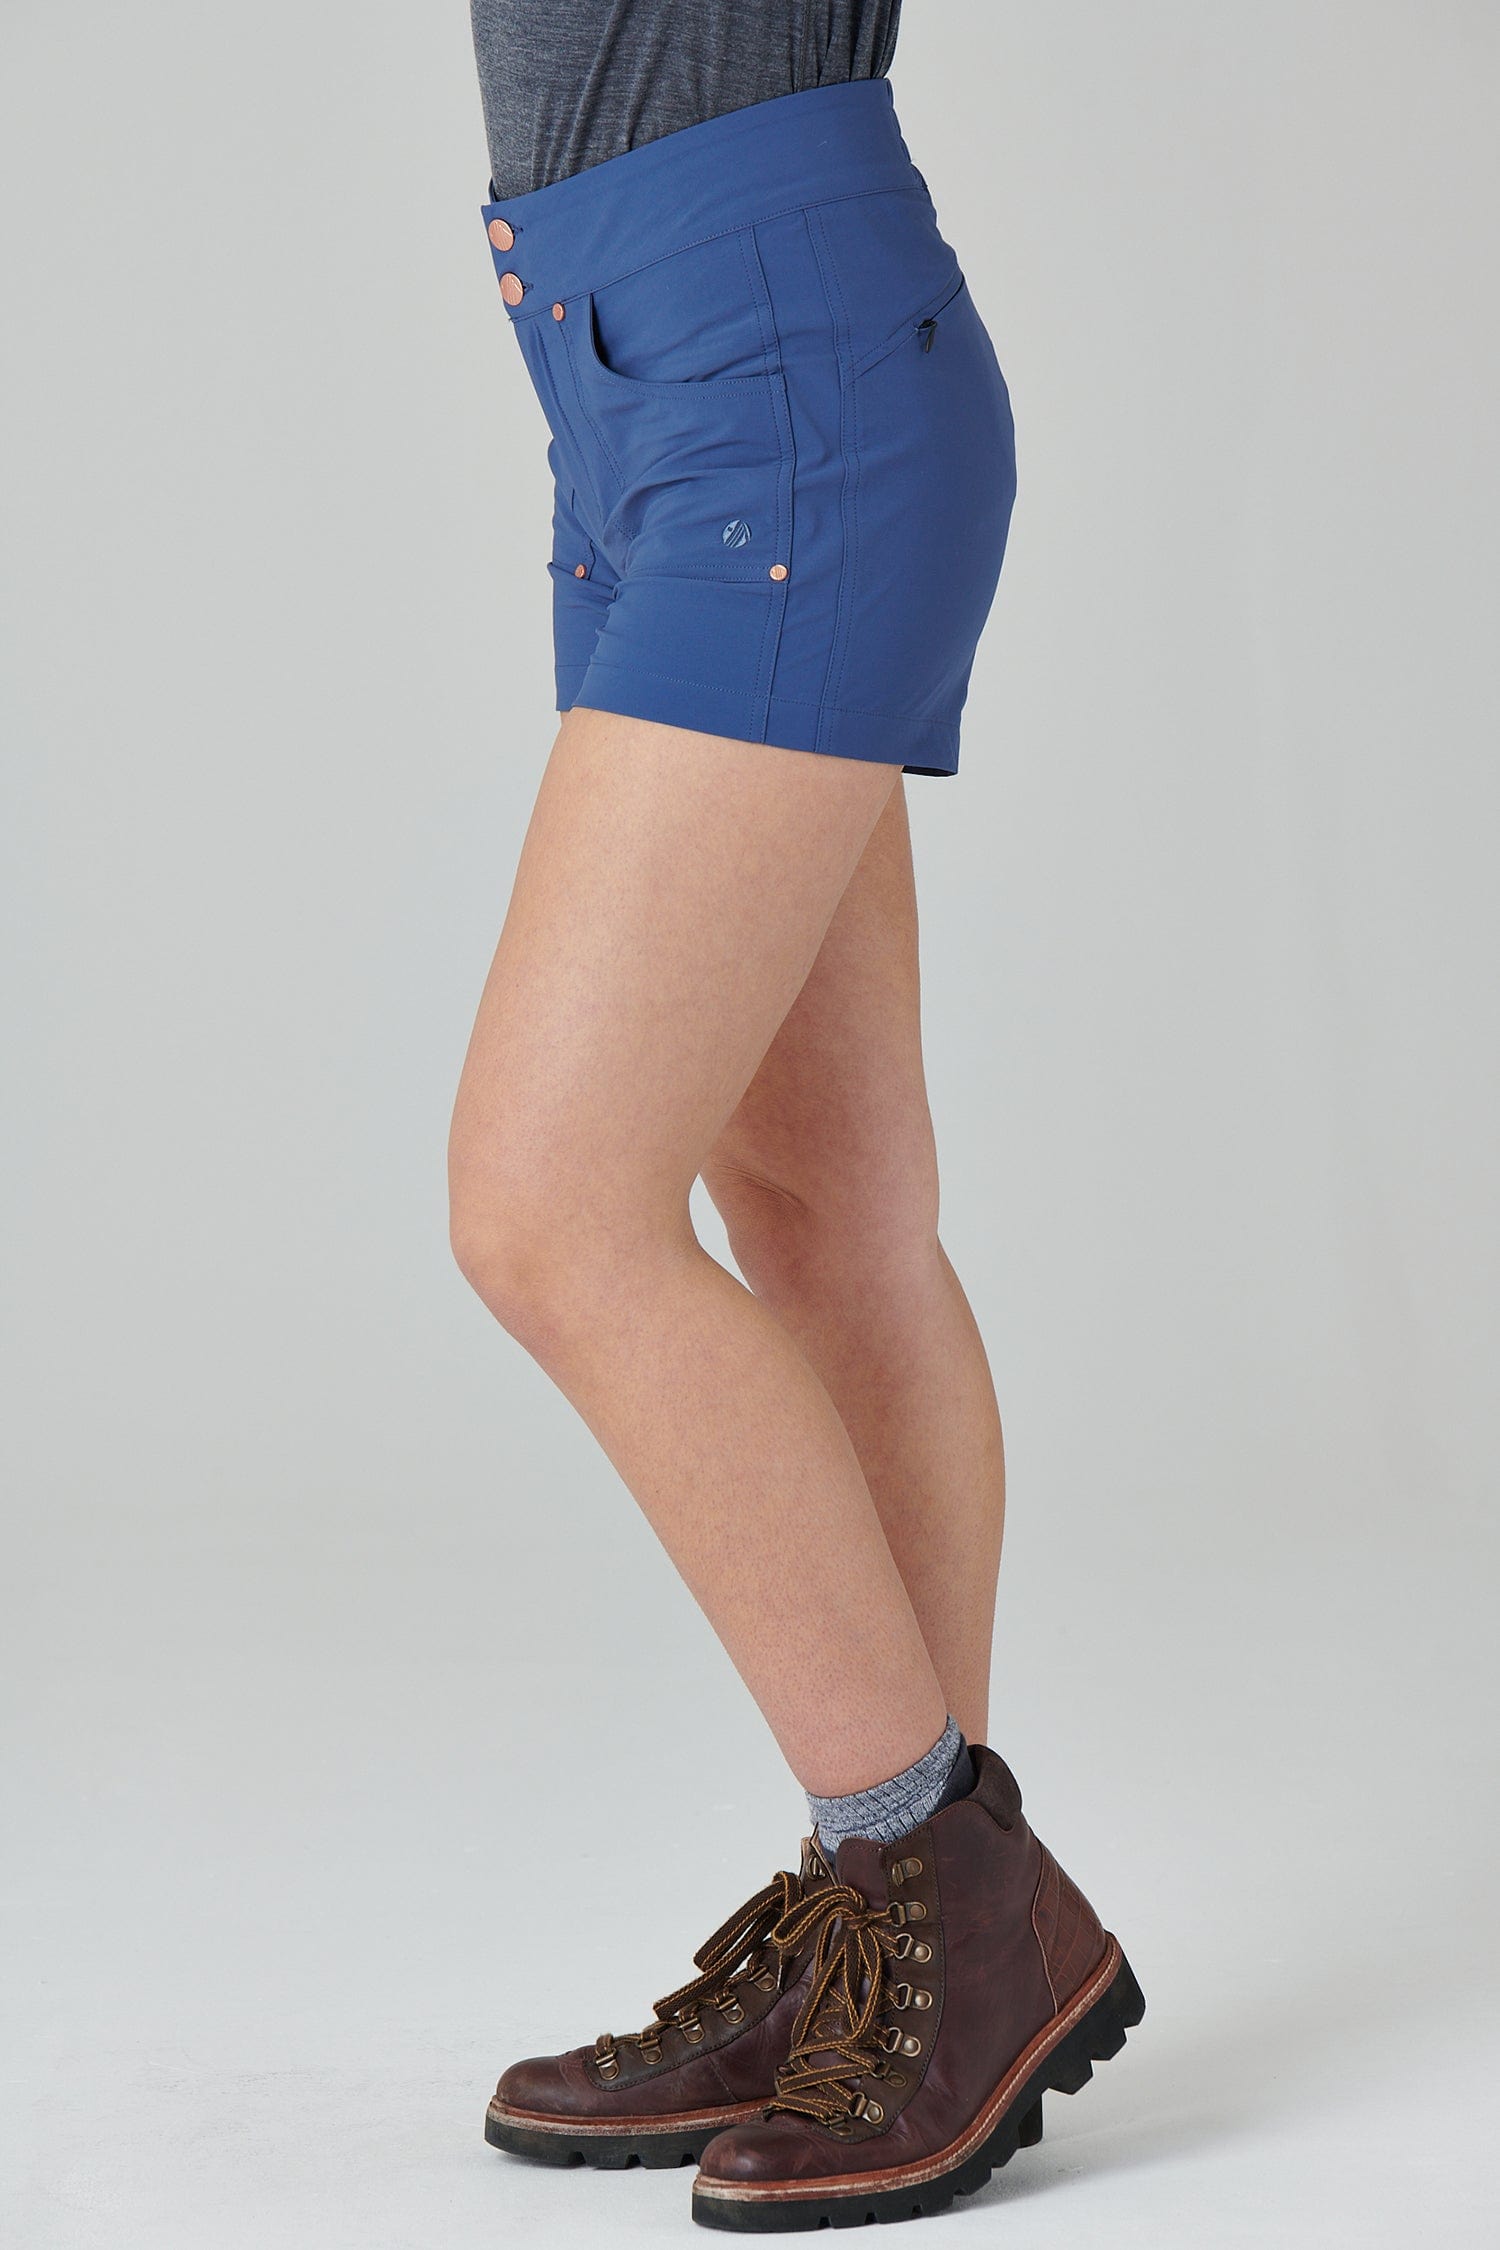 Trek Shorts - Steel Blue - 30 / Uk12 - Womens - Acai Outdoorwear